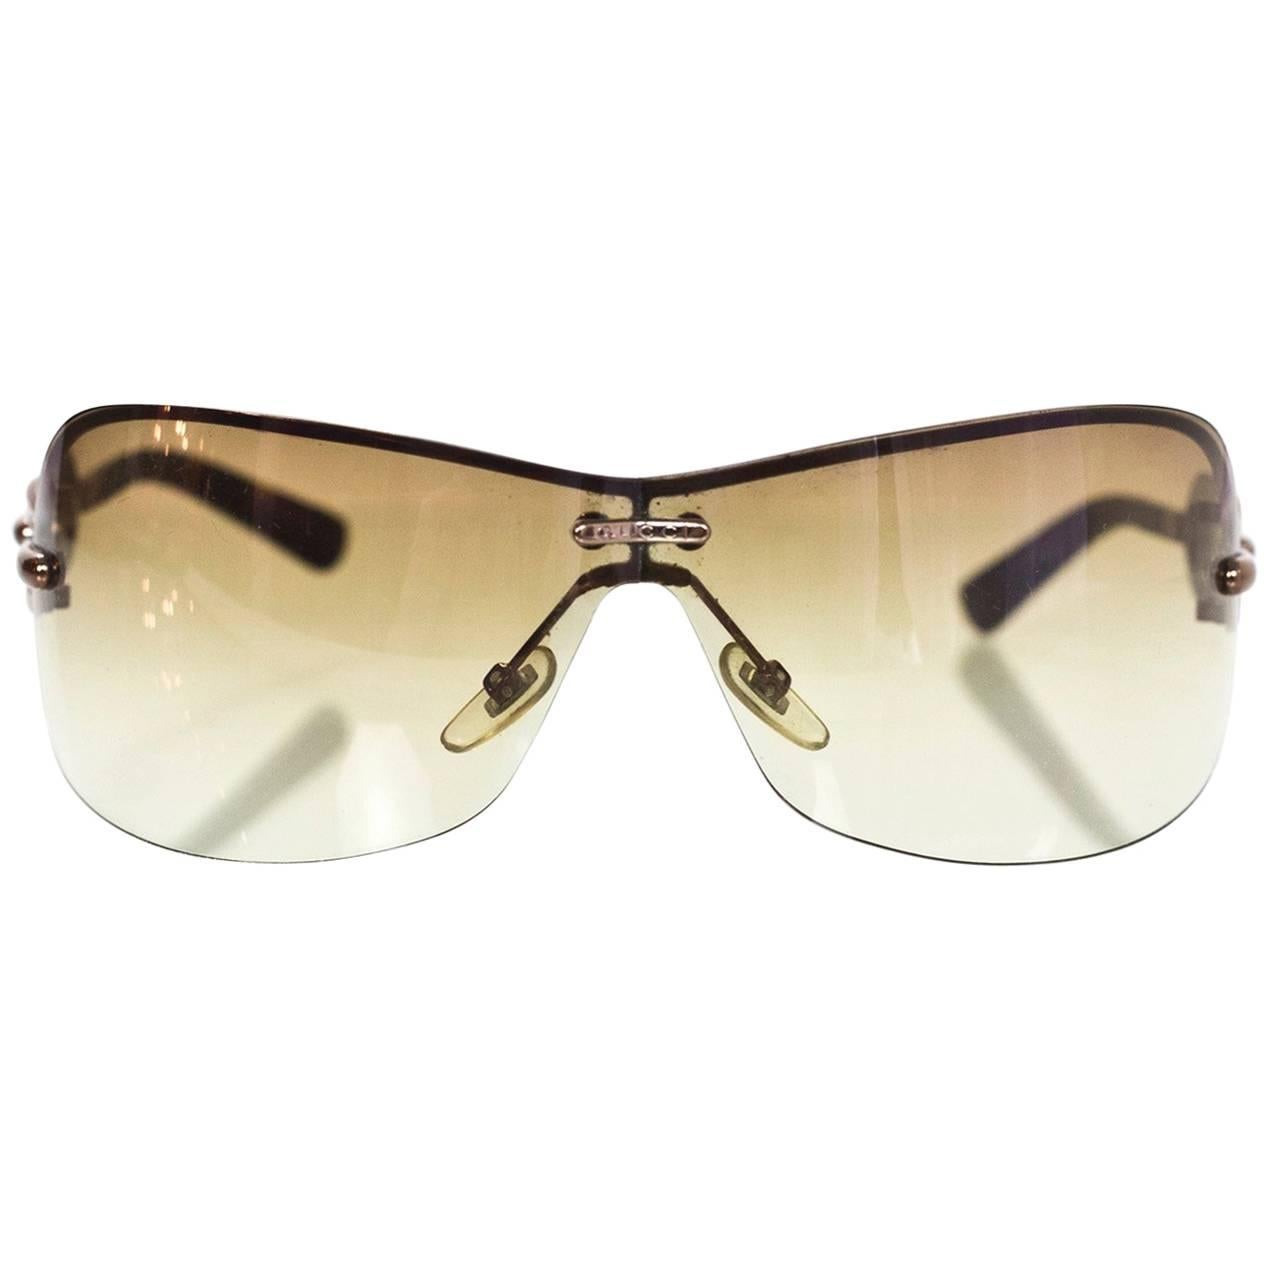 Gucci Brown Shield Sunglasses with Box and Case